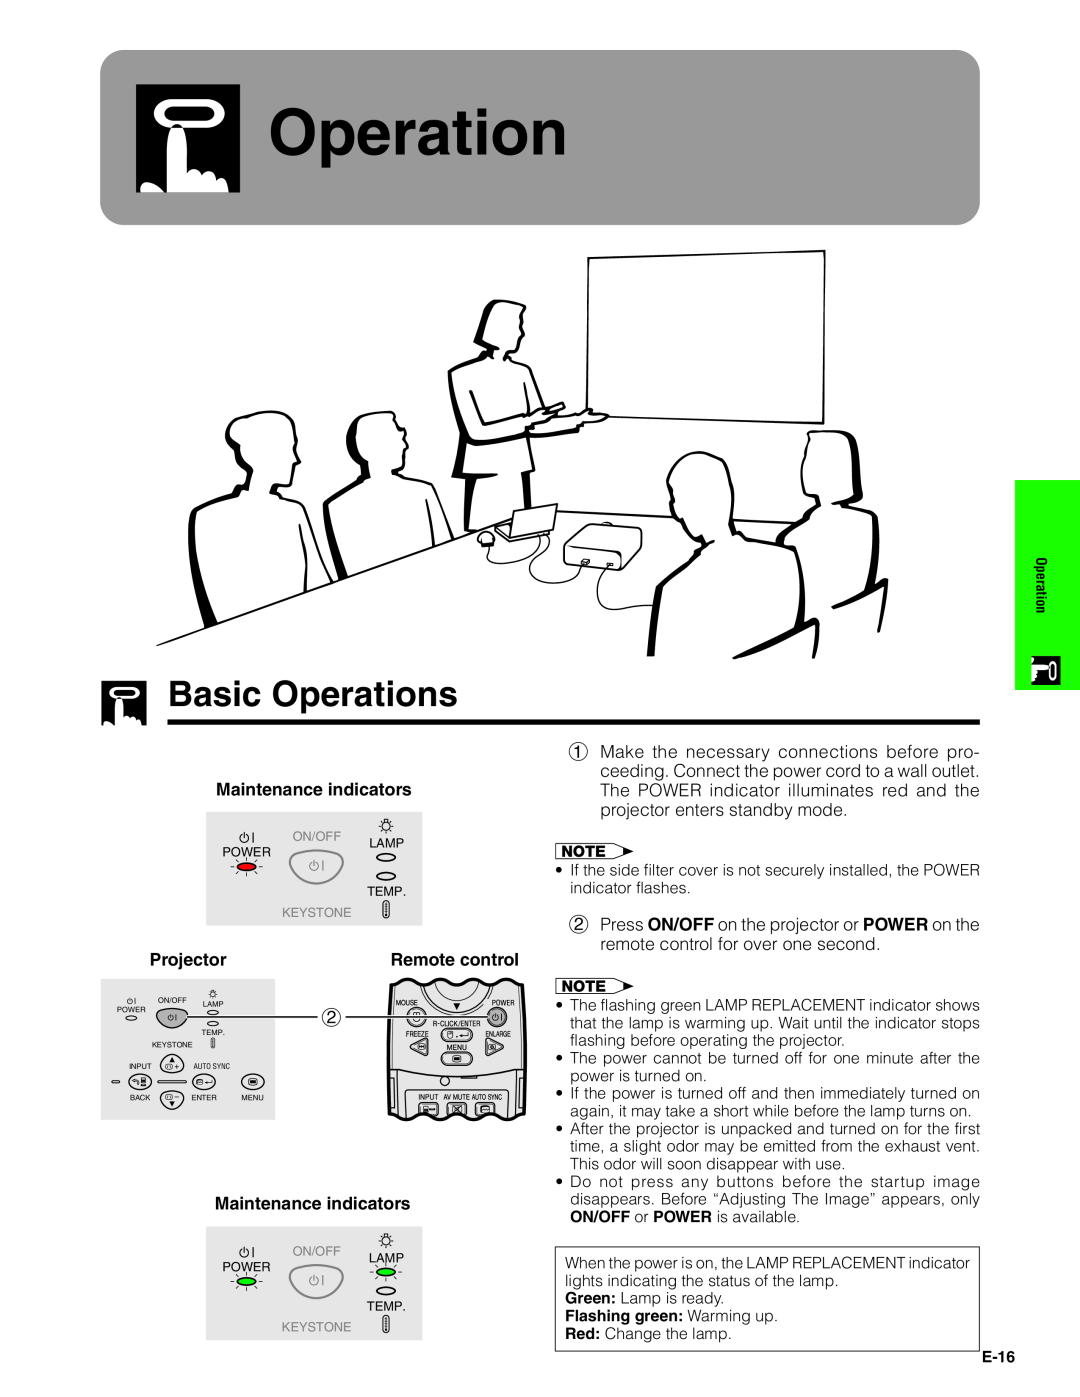 Sharp PG-C20XU operation manual Basic Operations, Maintenance indicators, Projector, Remote control 